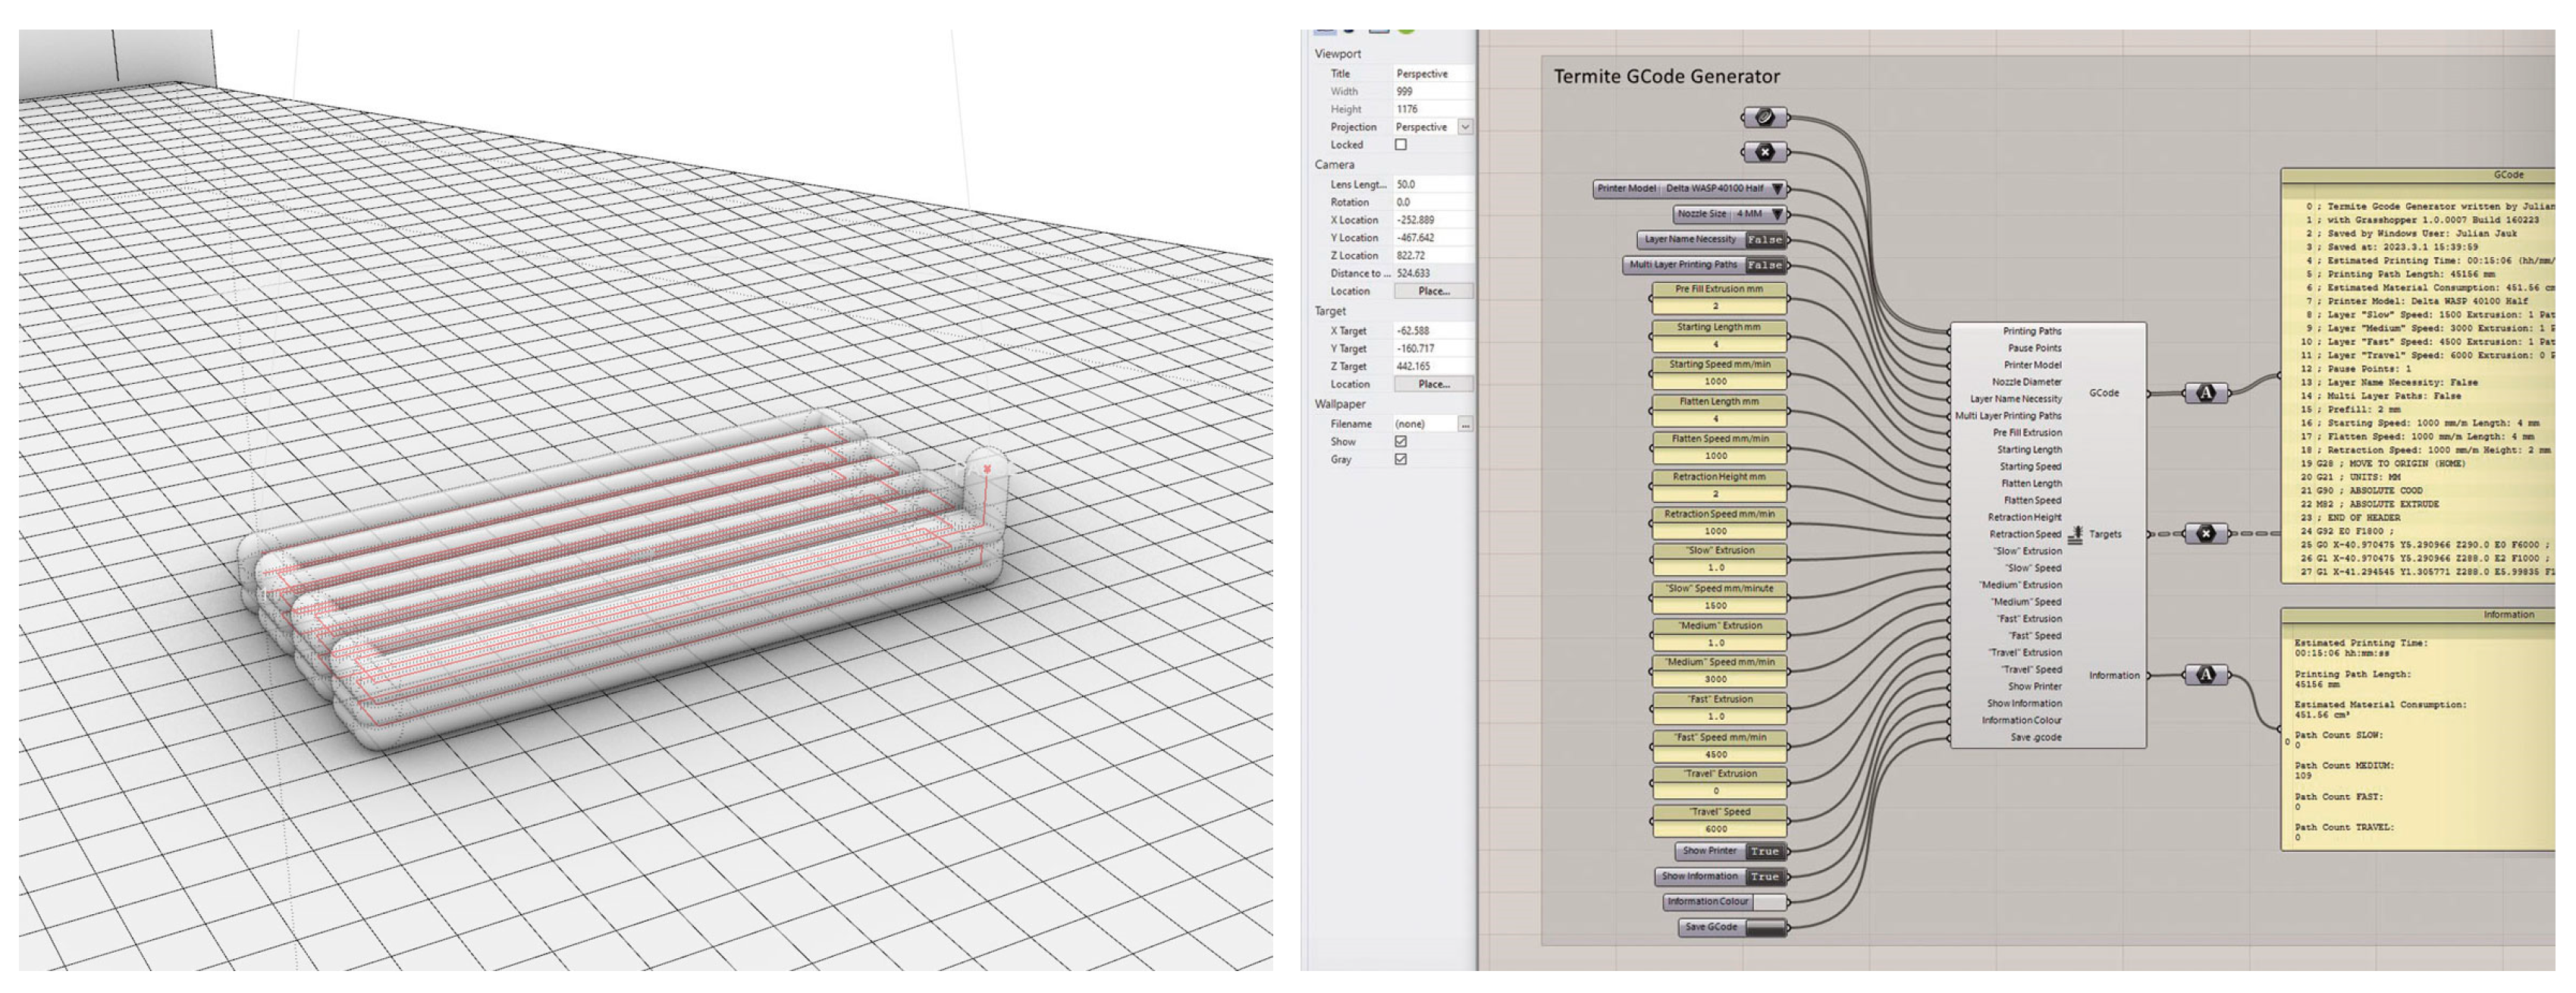 Gcode - 3D printing extrusion - Grasshopper - McNeel Forum